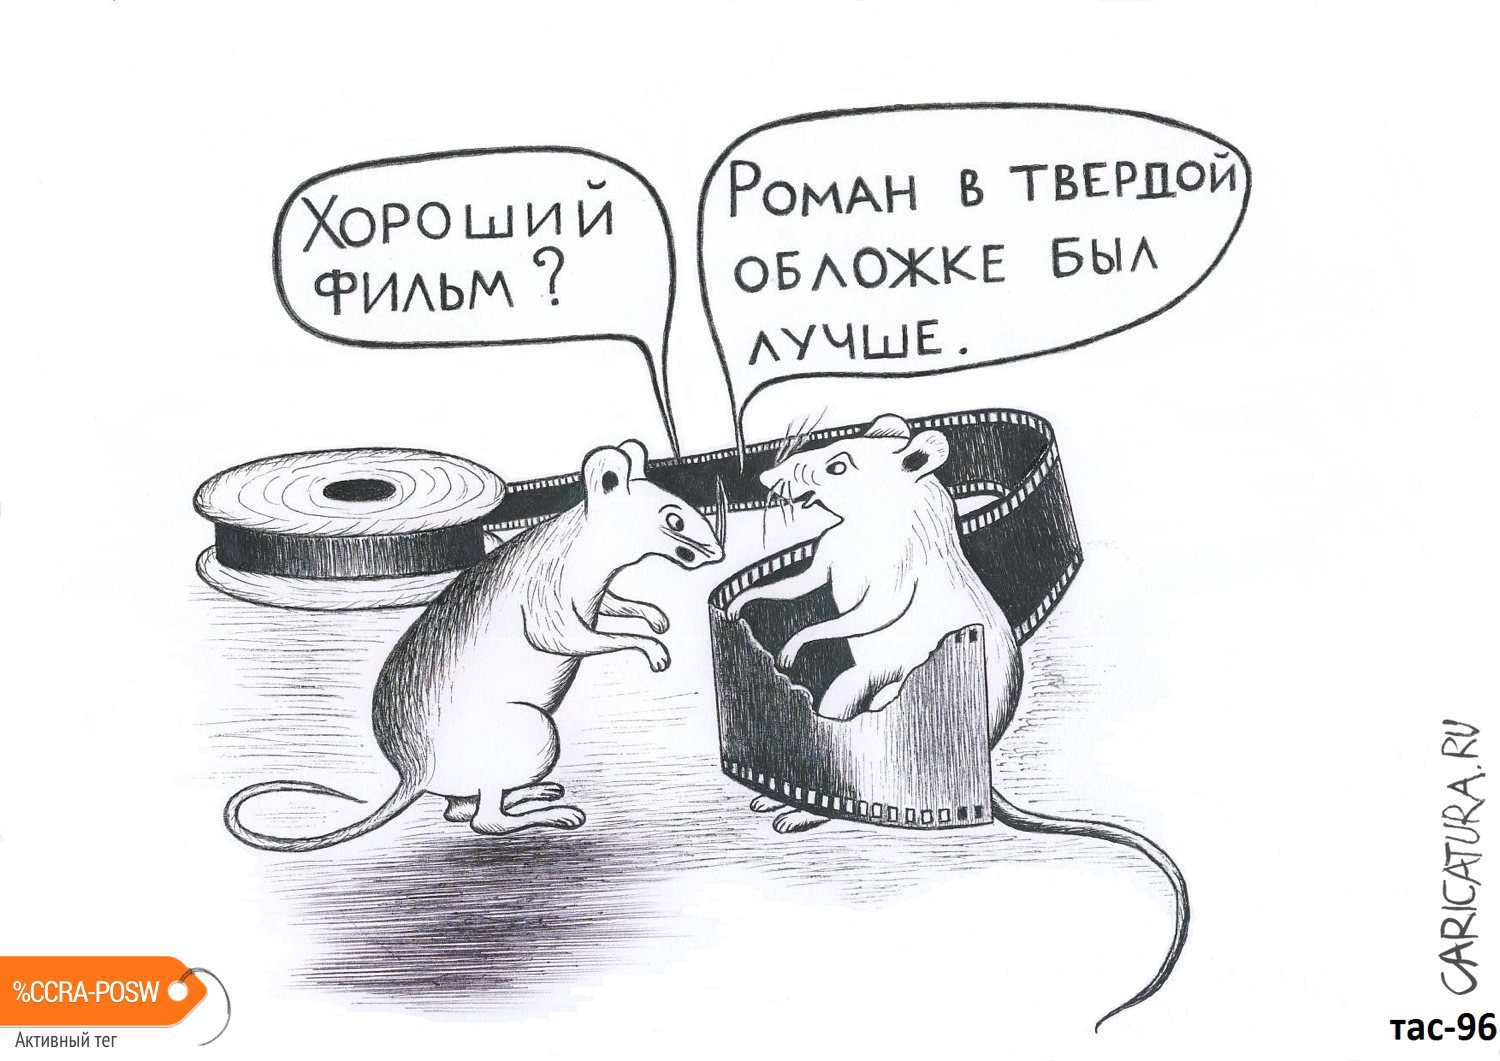 Карикатура "Роман был лучше", Александр Троицкий